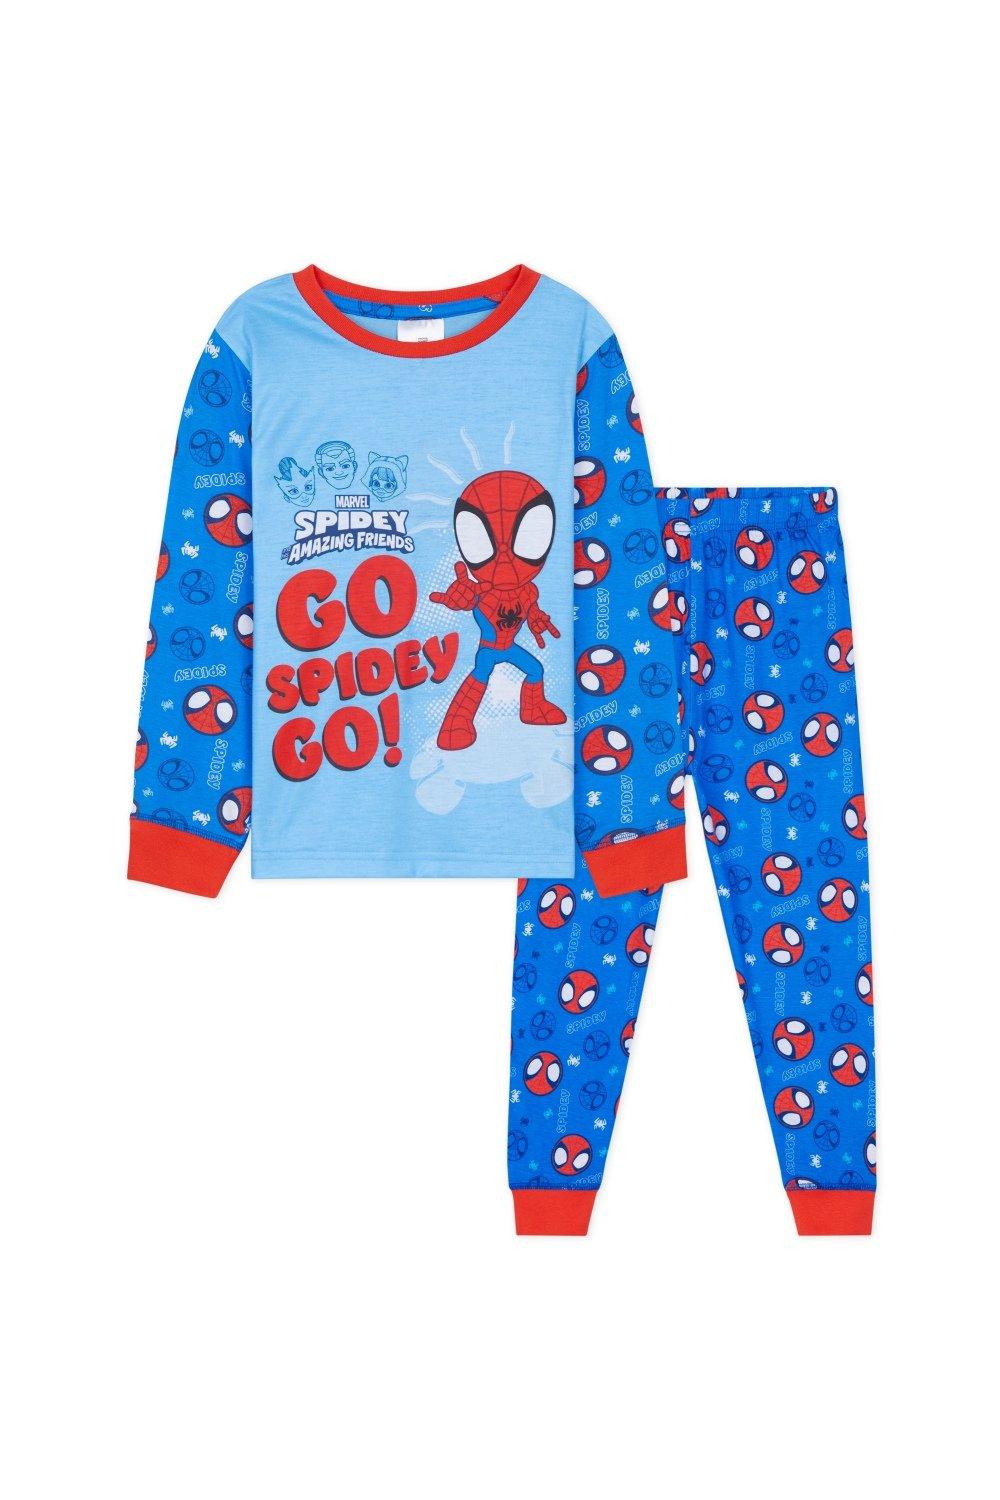 Spidey & Amazing Friends Long Sleeve Pyjama Set